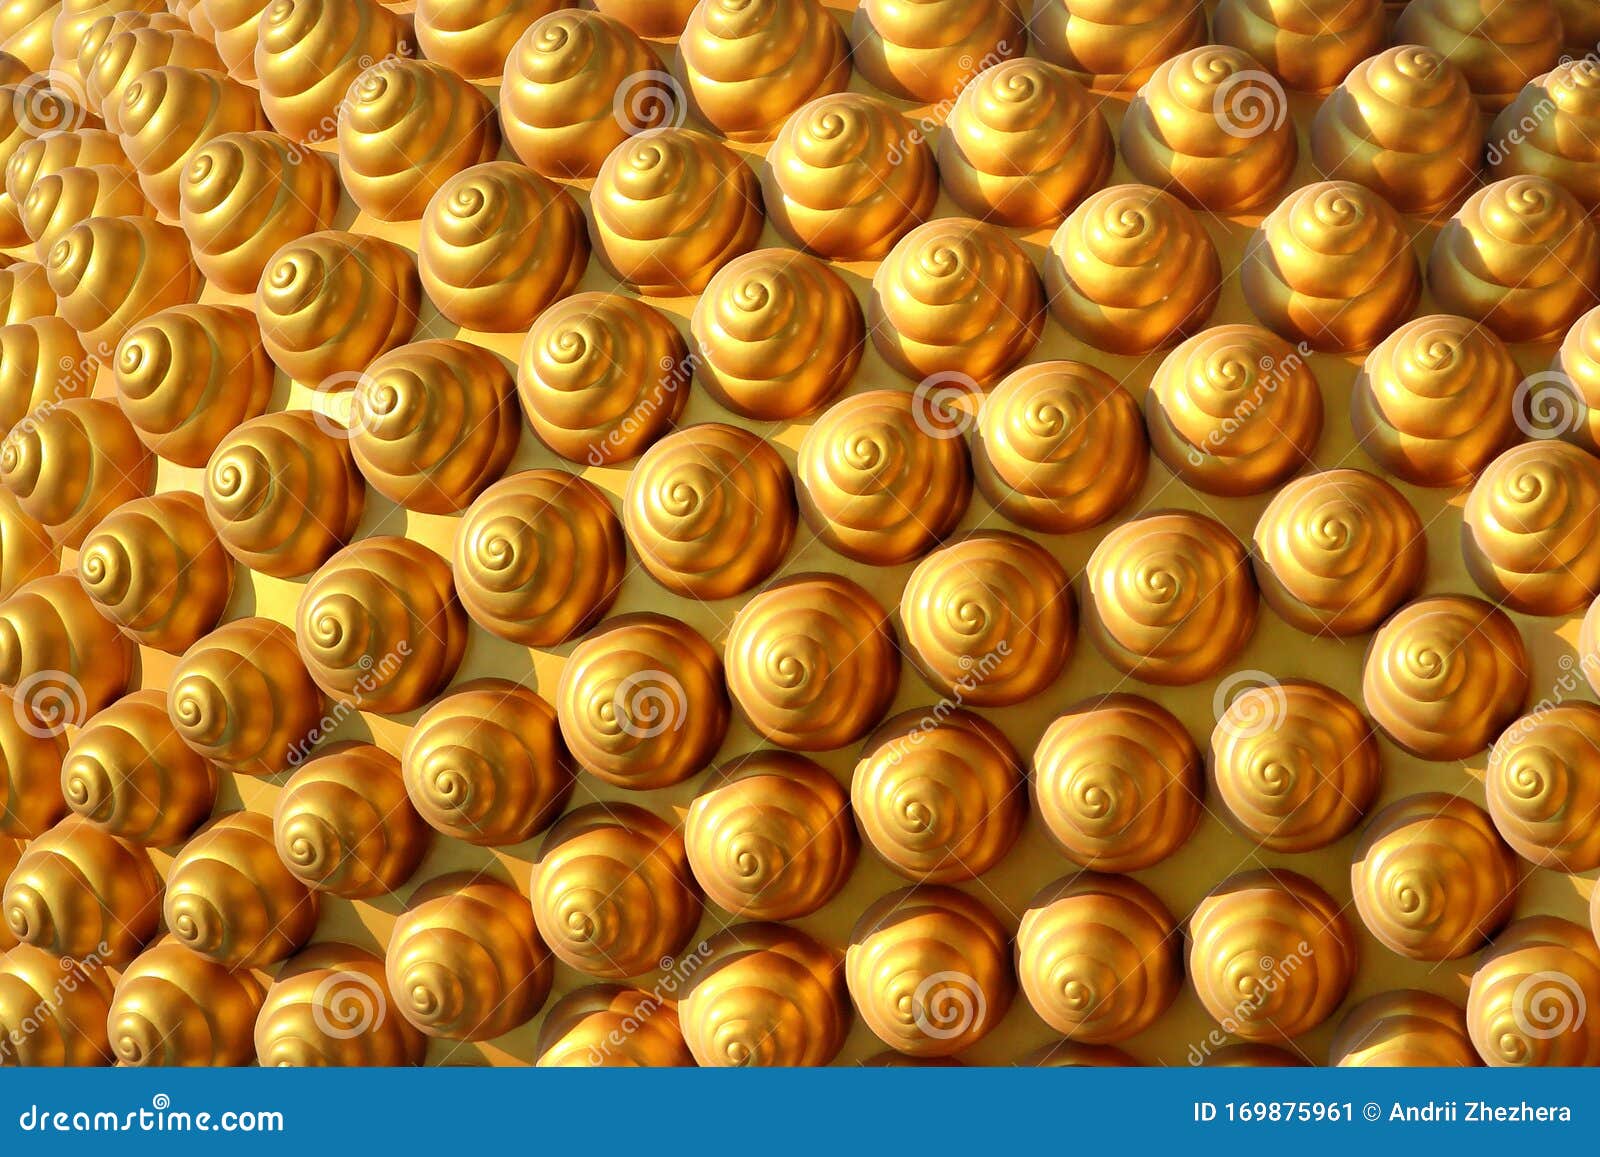 Golden Hair Curls on Head of Buddha Stock Image - Image of asian, buddha:  169875961